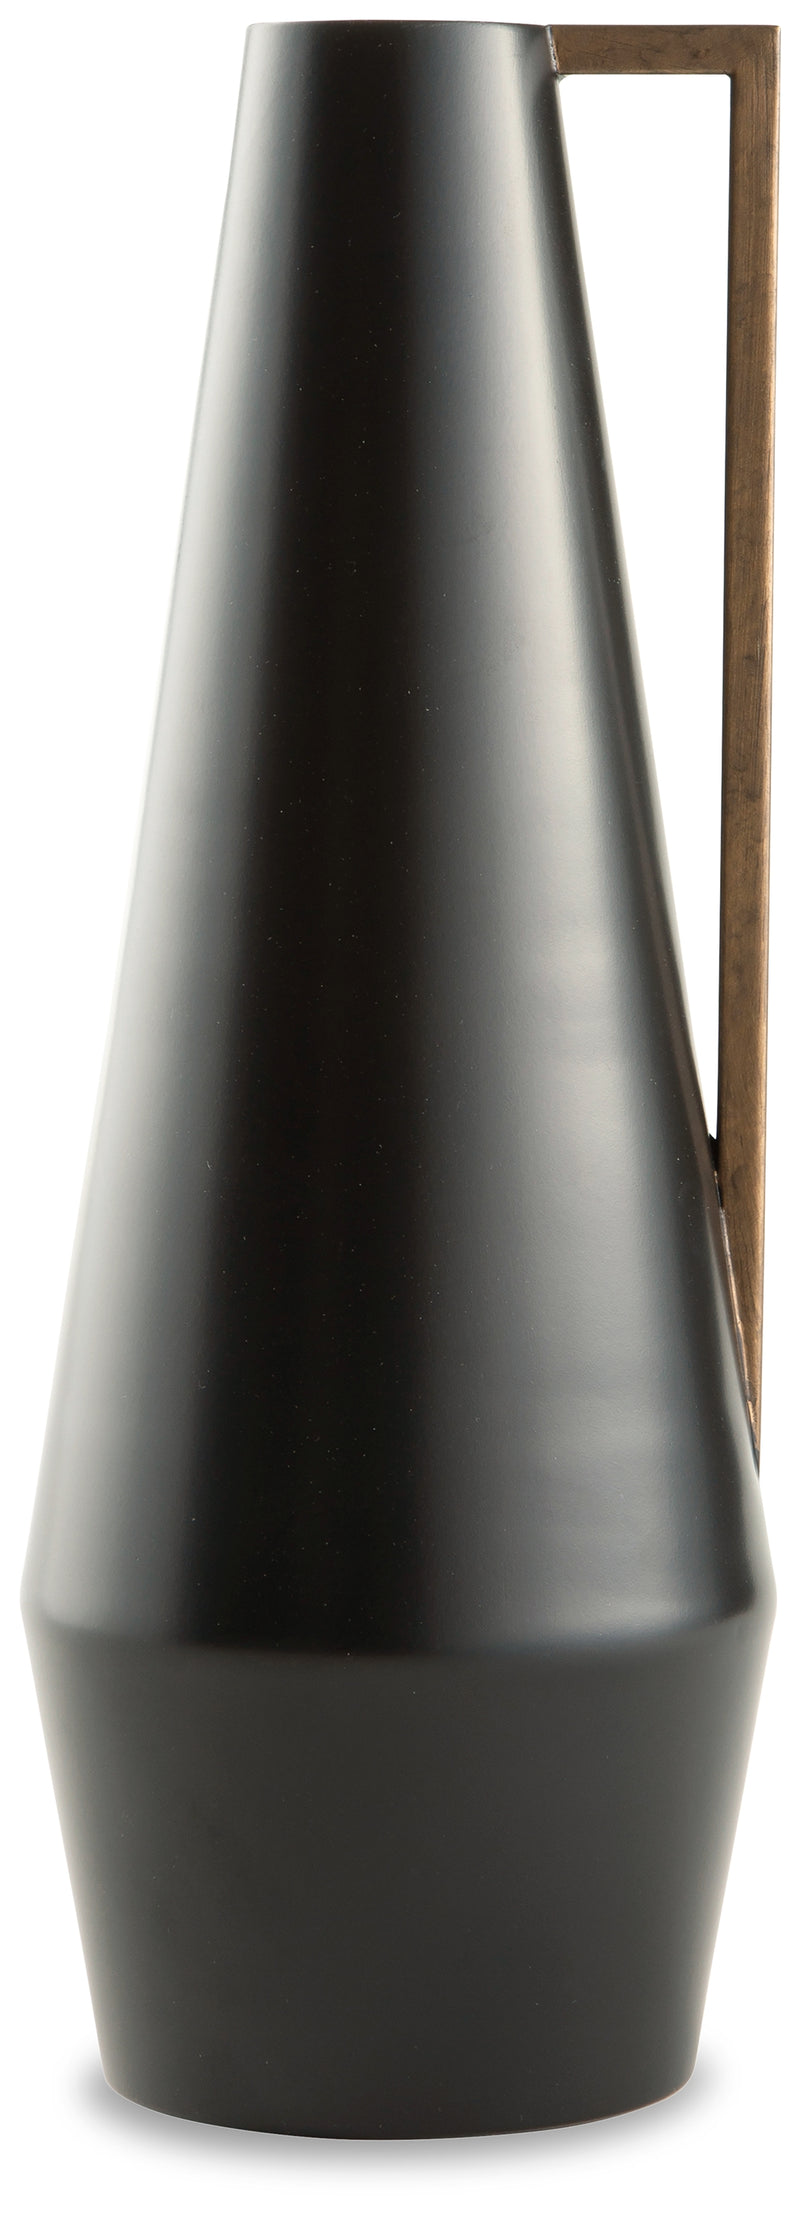 Pouderbell Black/gold Finish Vase A2000554